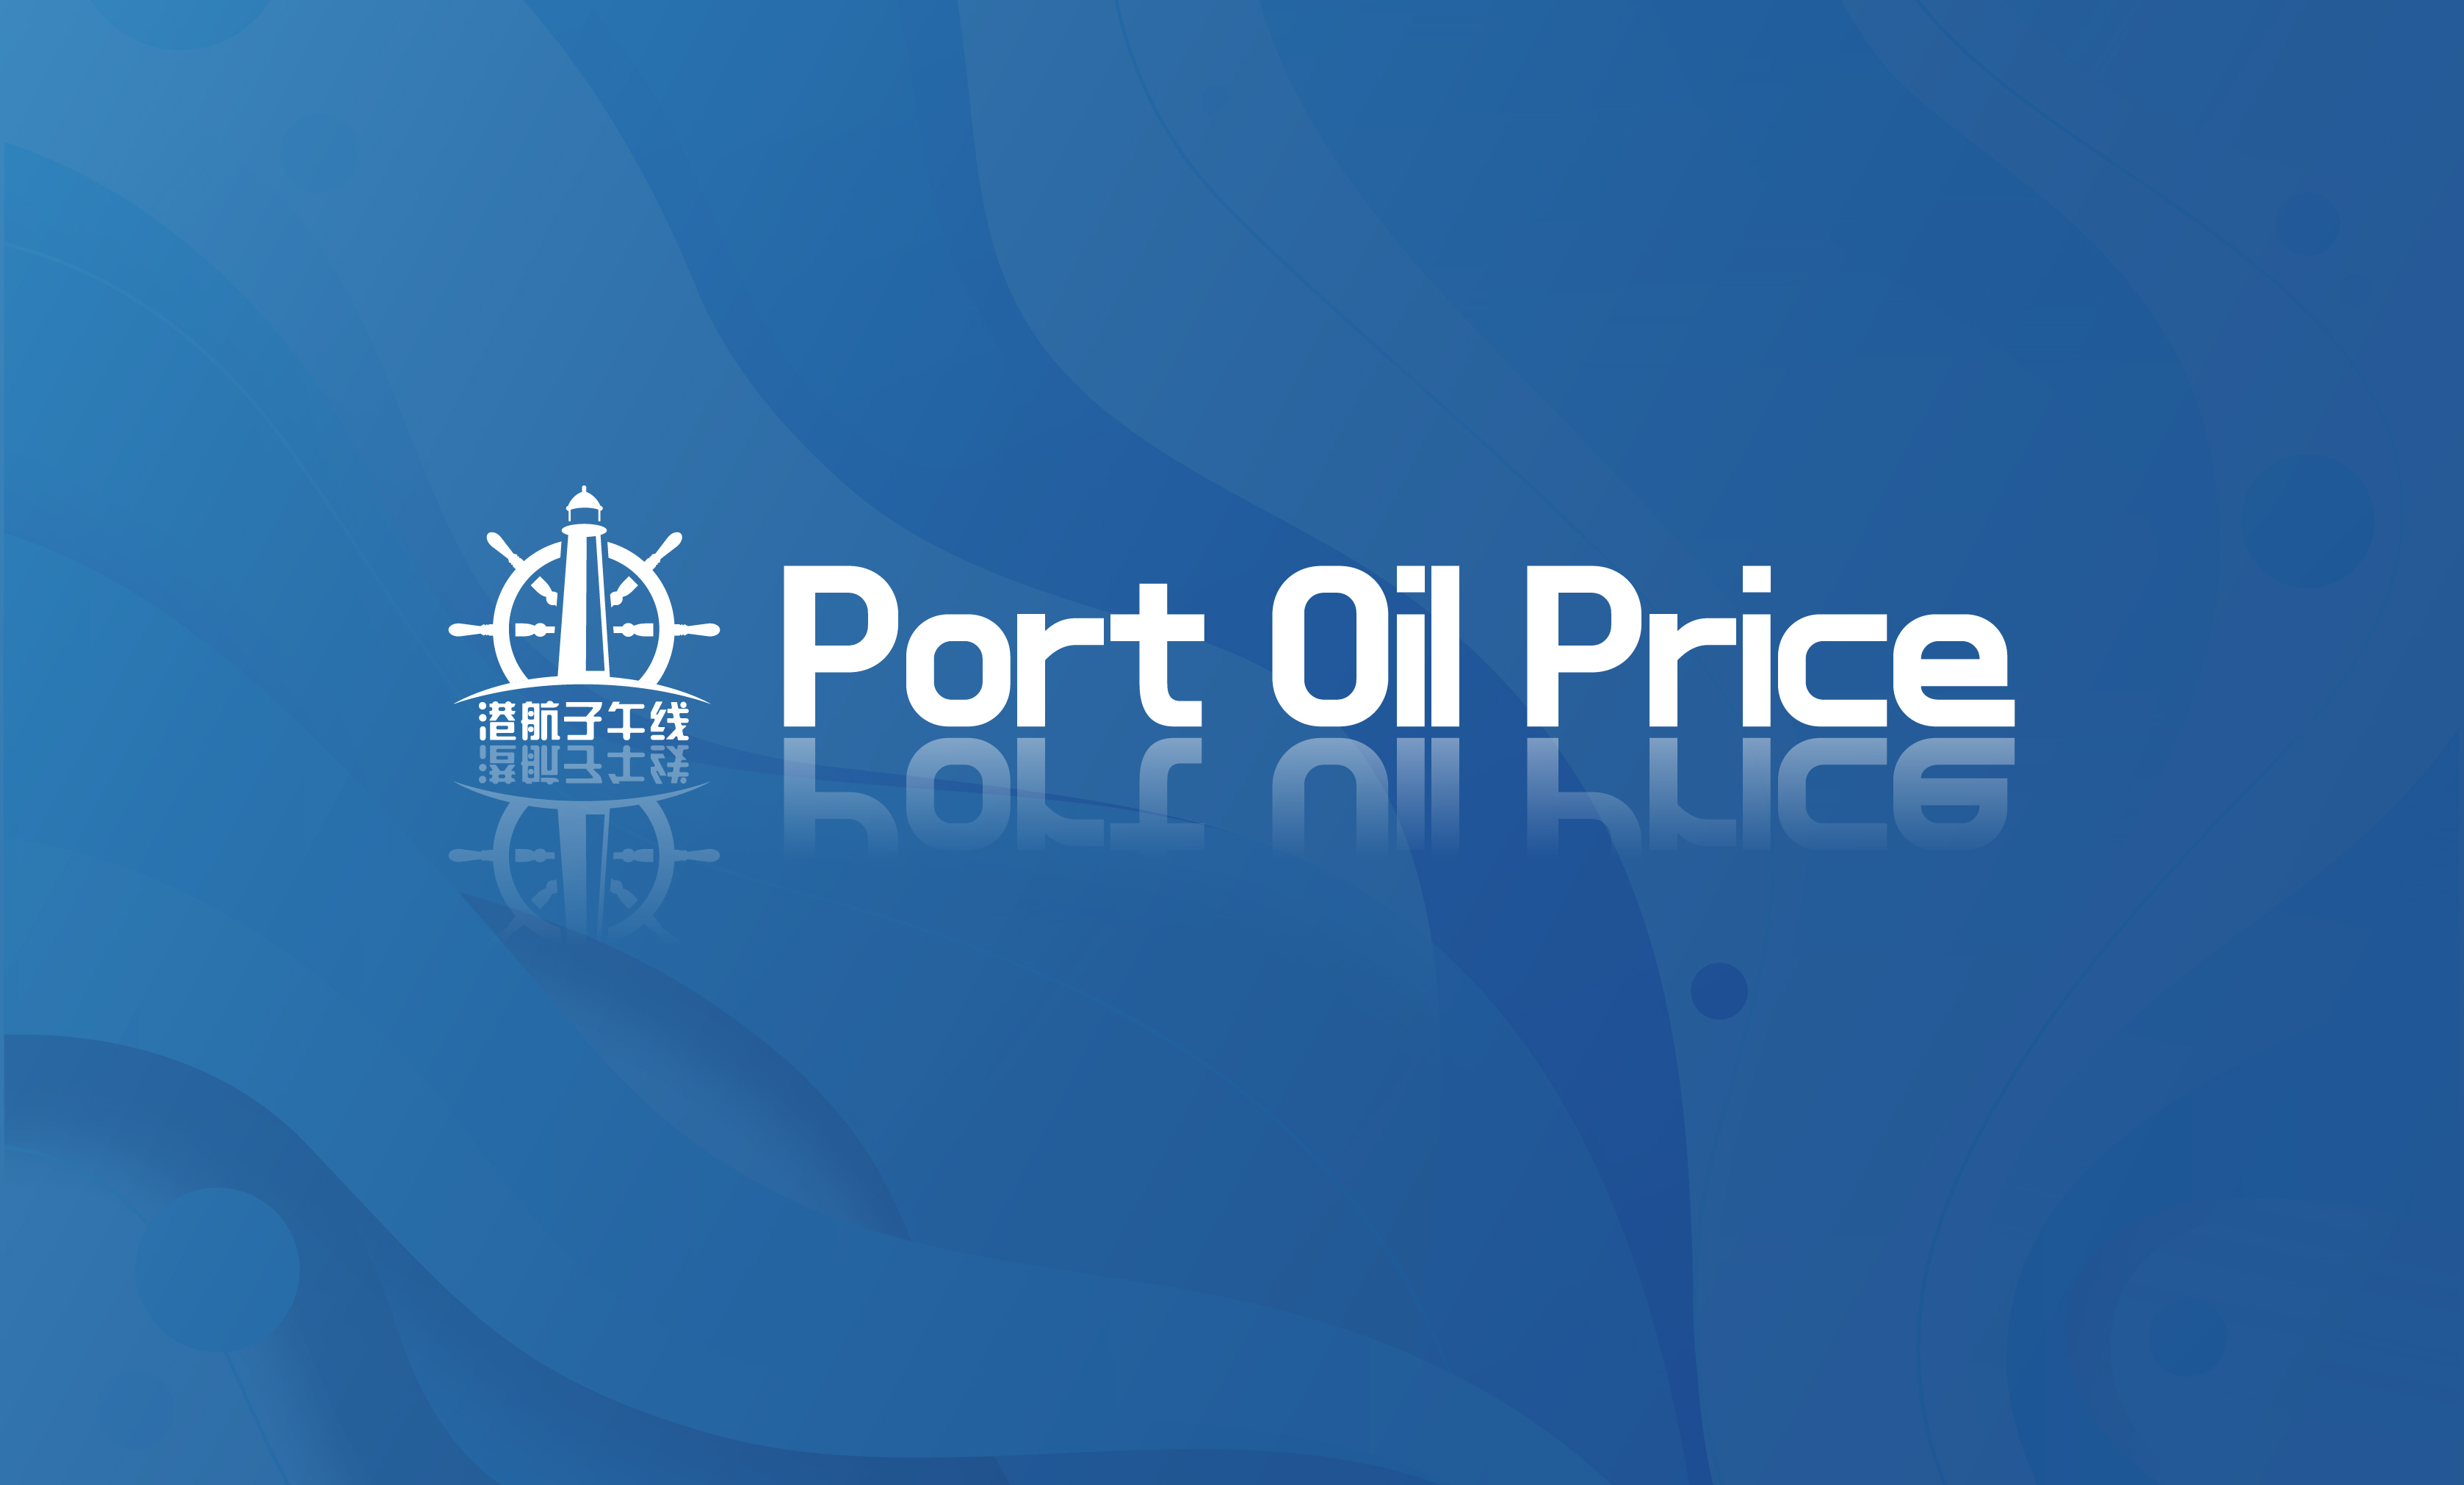 9/25 Oil Price for Global Popular Ports